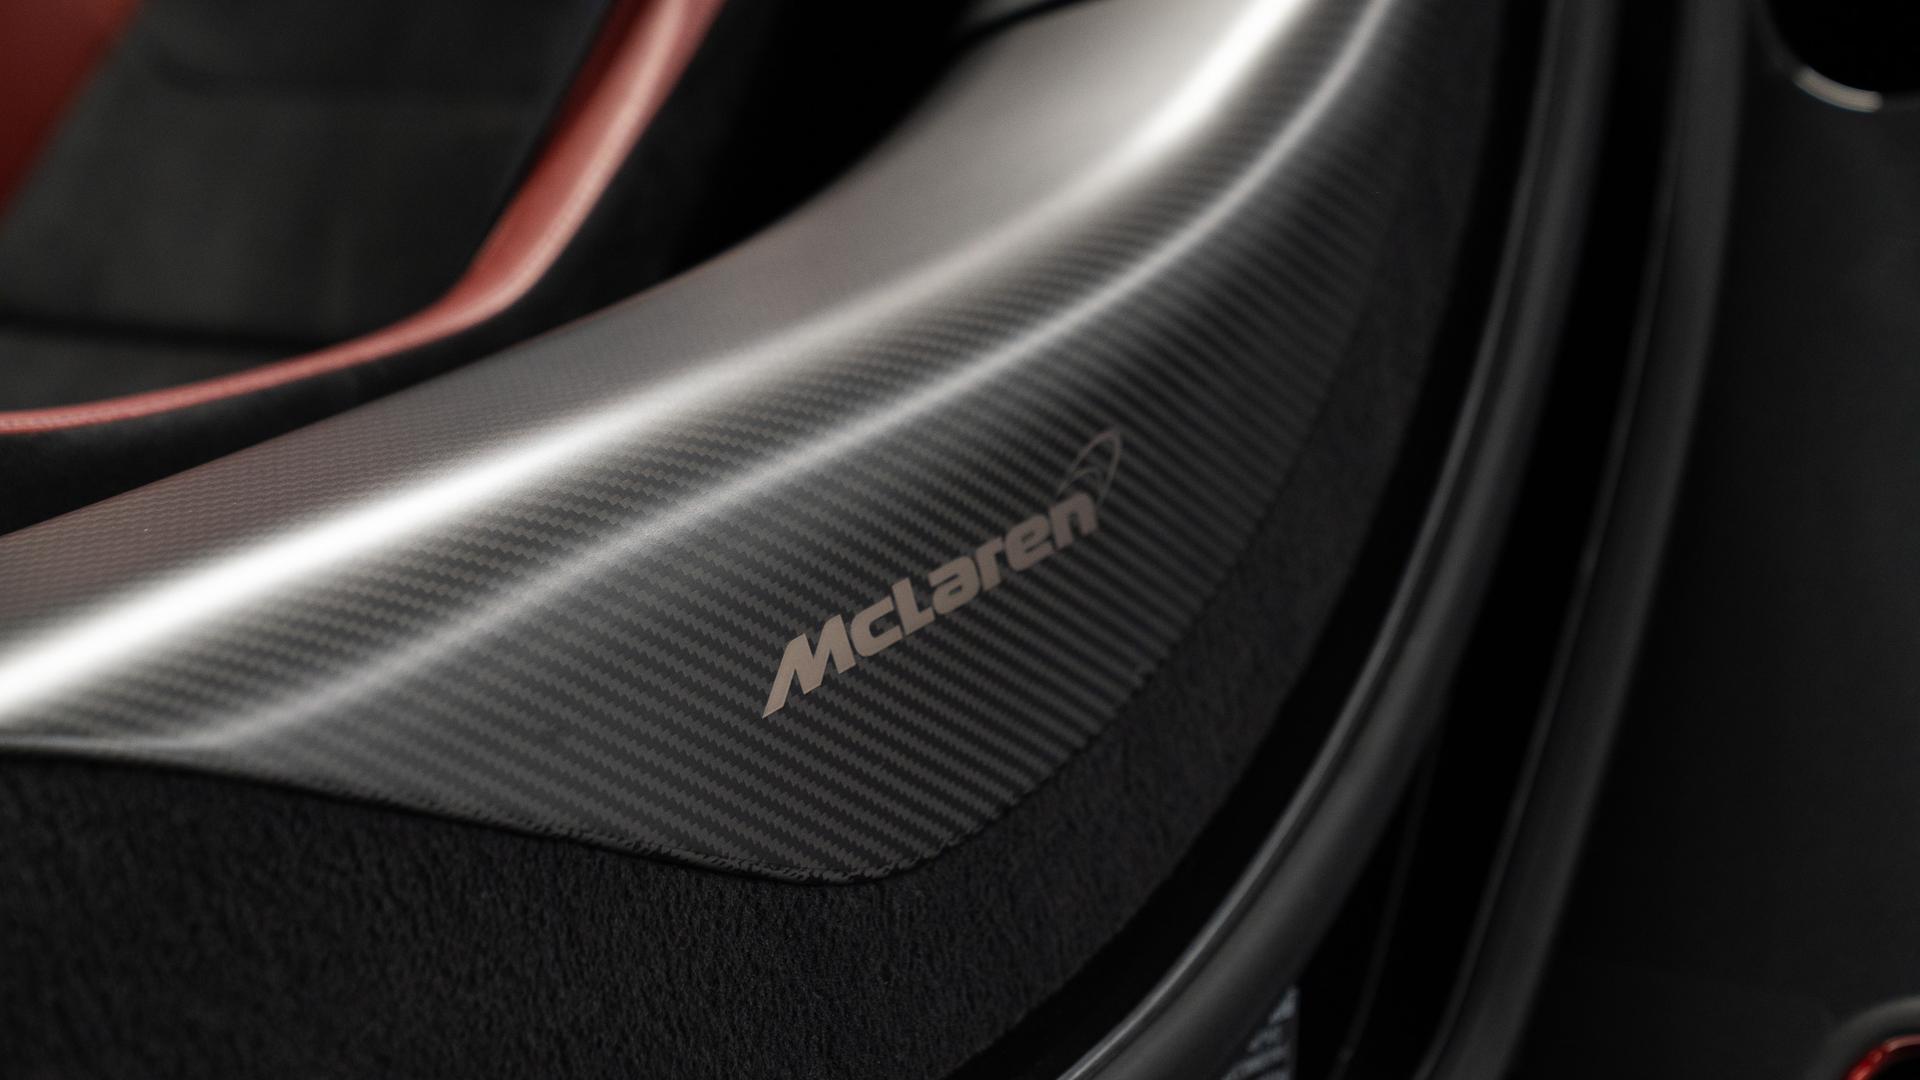 McLaren 720S Photo e45d7d6f-dd45-4ef0-9135-6e9046c8e632.jpg